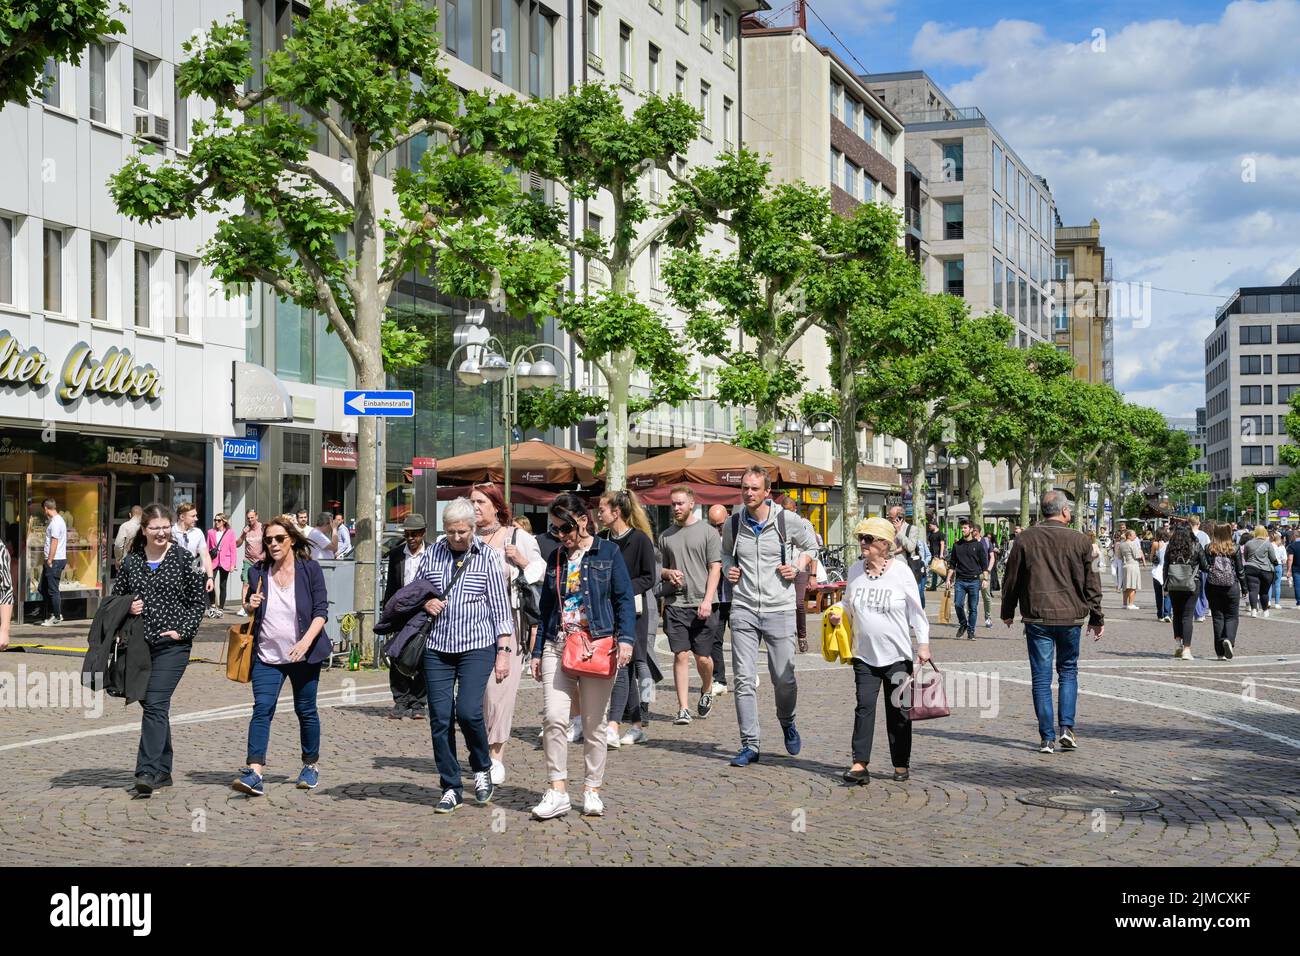 Straßenszene, Passanten, große Bockenheimer Straße, Fressgass, Frankfurt am Main, Hessen, Deutschland Stockfoto